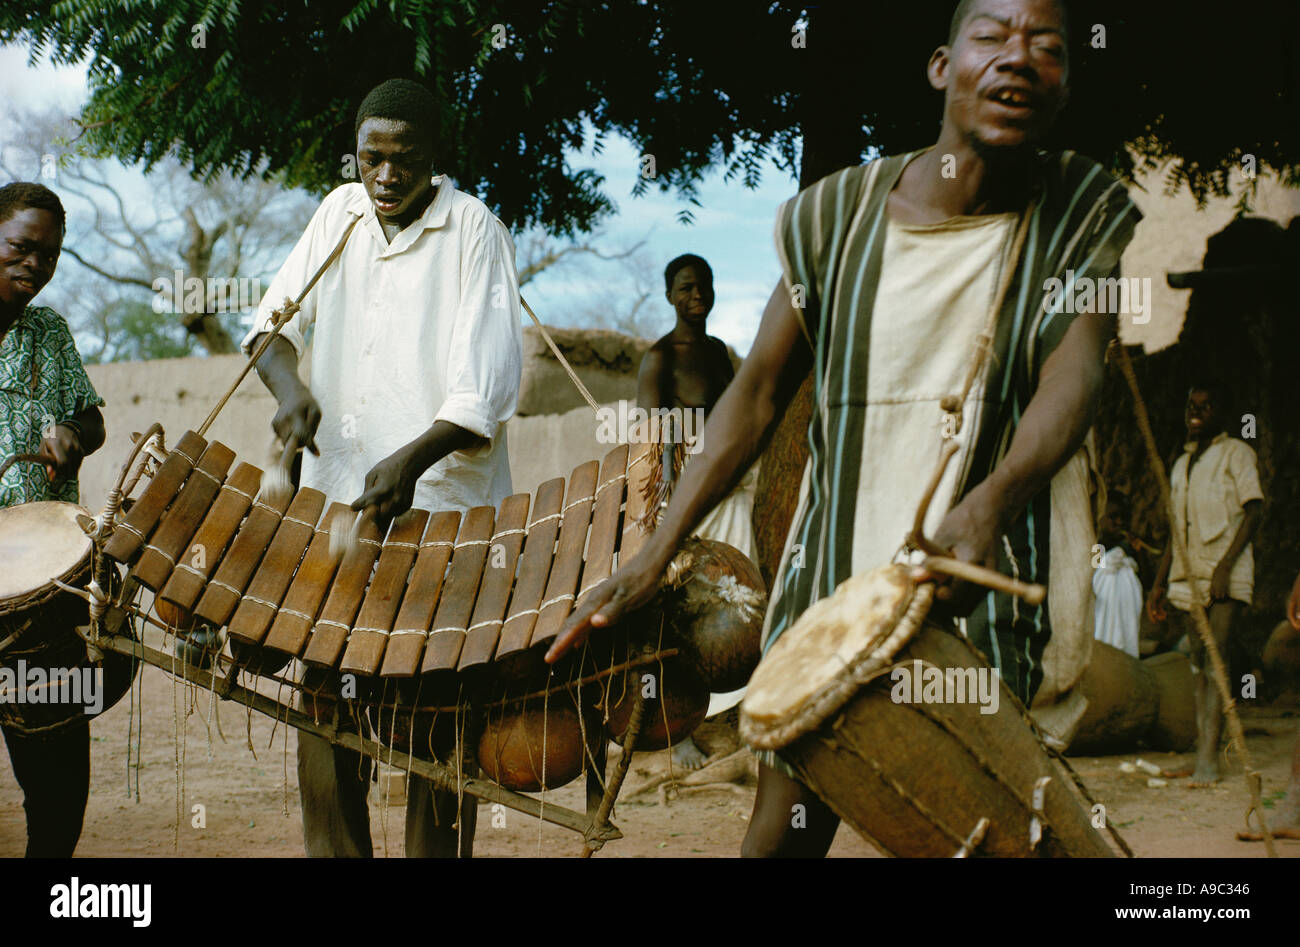 Musicians of Bobo tribe playing drums and balafon xylophone in Koumbia Burkina Faso Africa Stock Photo